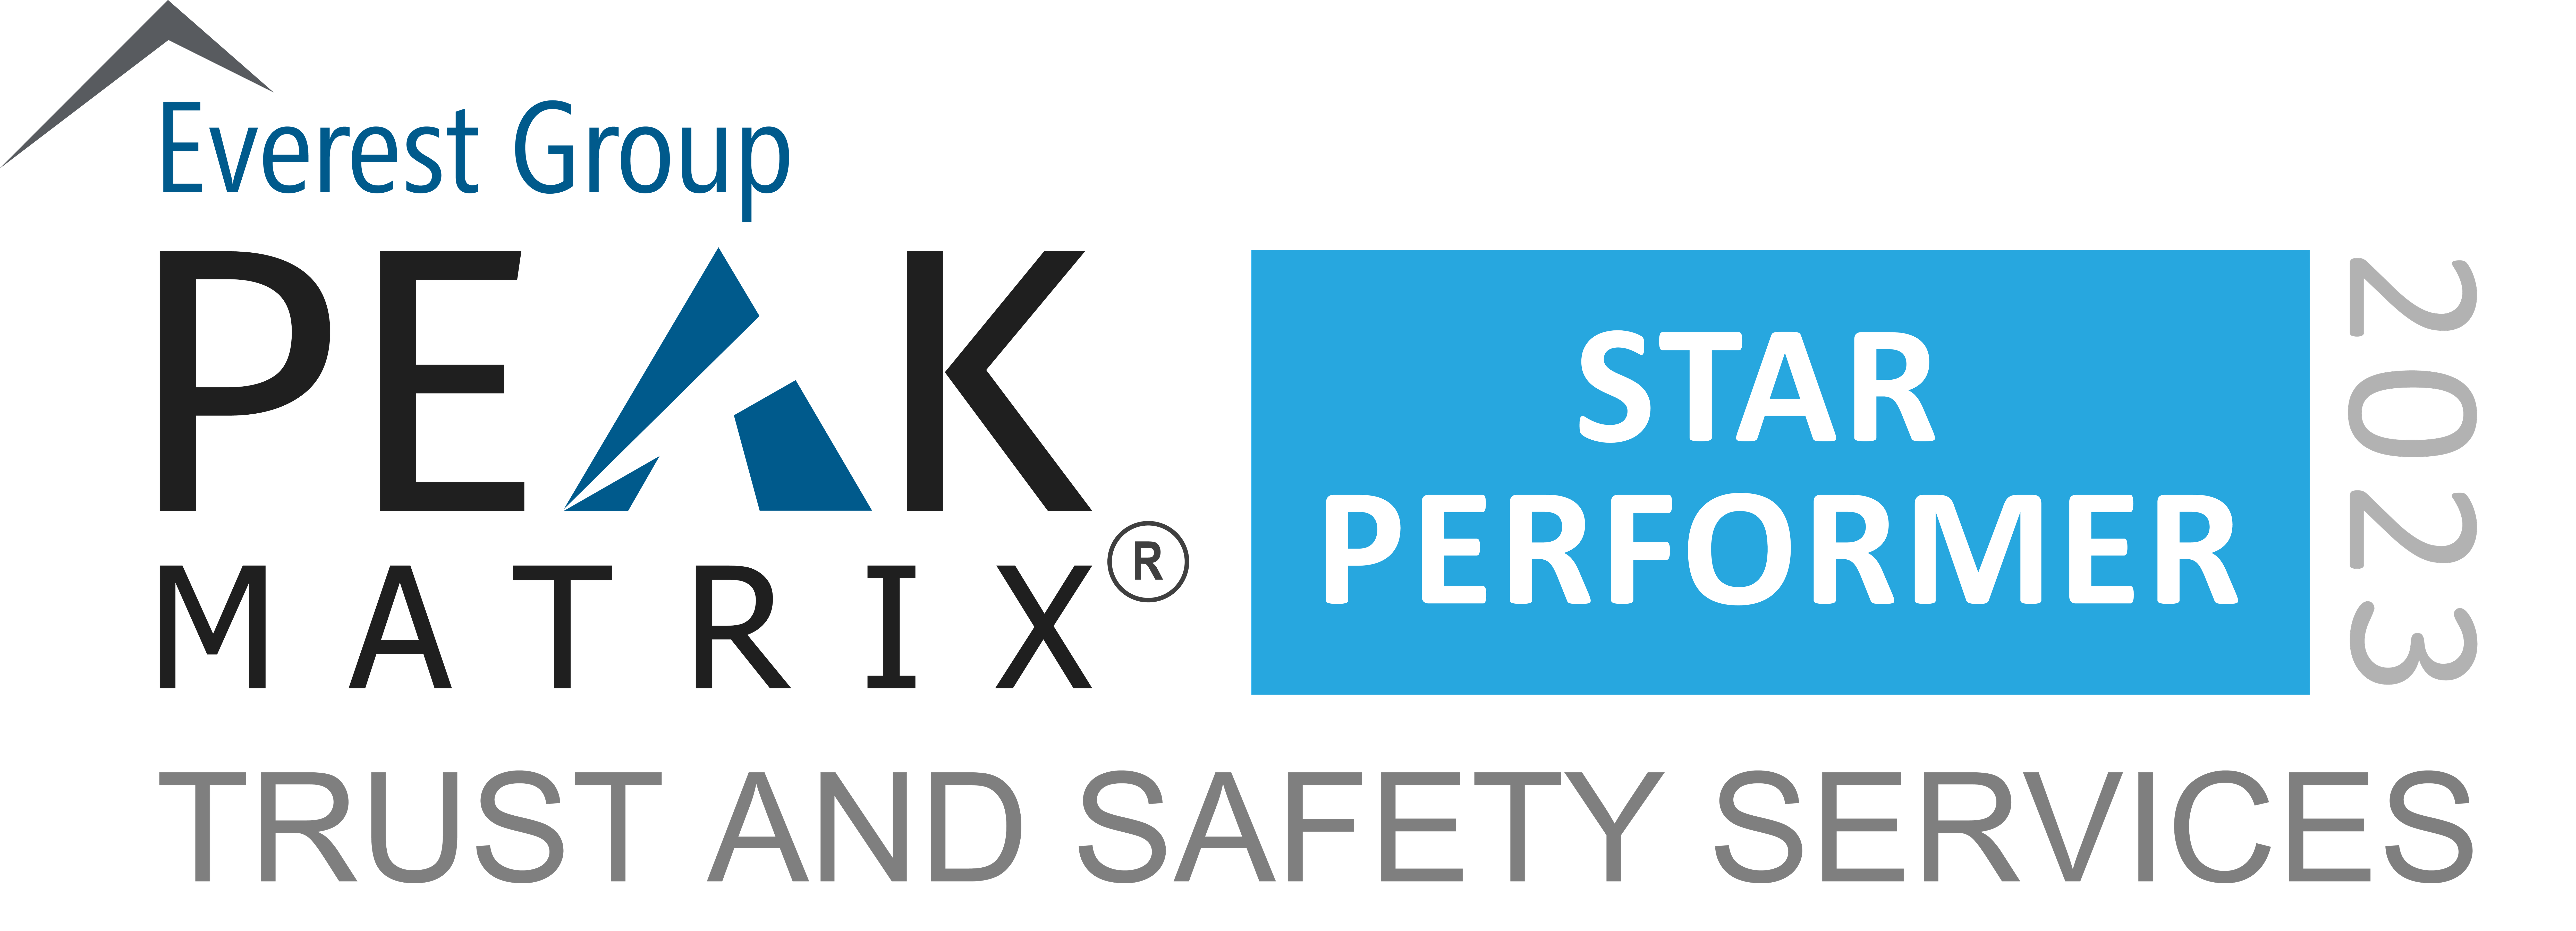 Trust and Safety Services 2023 - PEAK Matrix Award Logo - Star Performer